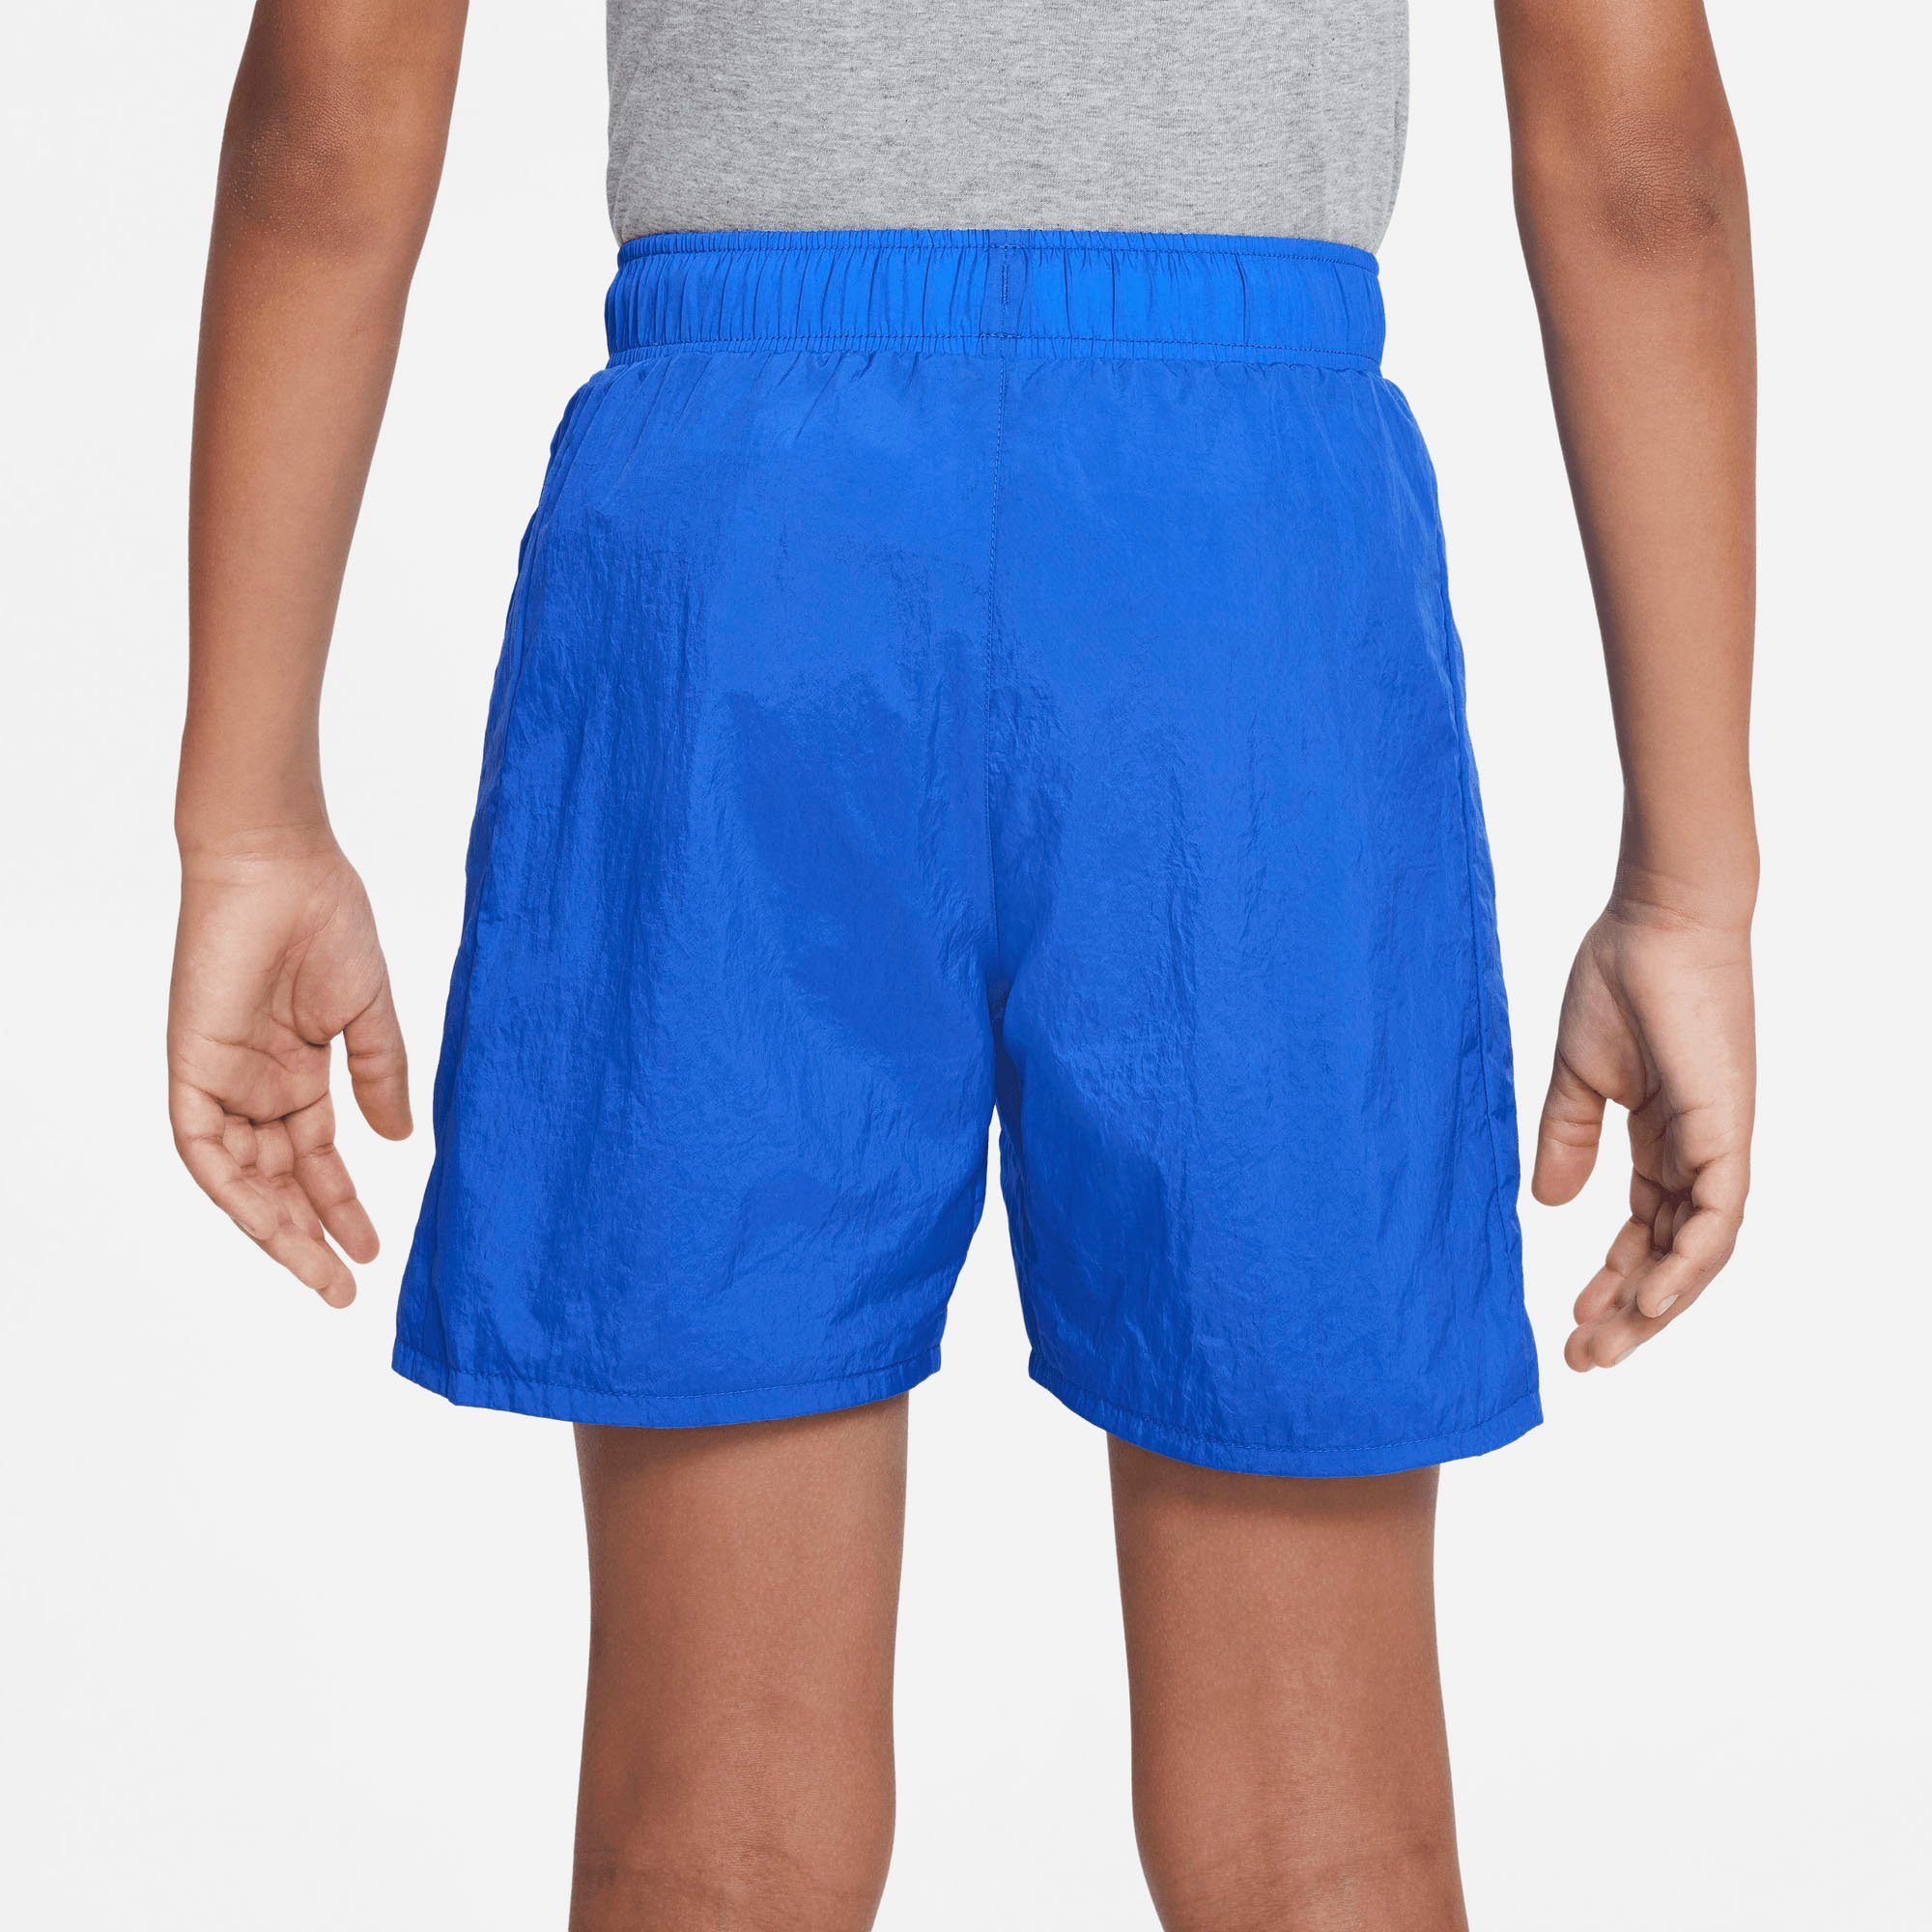 Big blau Kids' Nike (Boys) Shorts Shorts Woven Sportswear